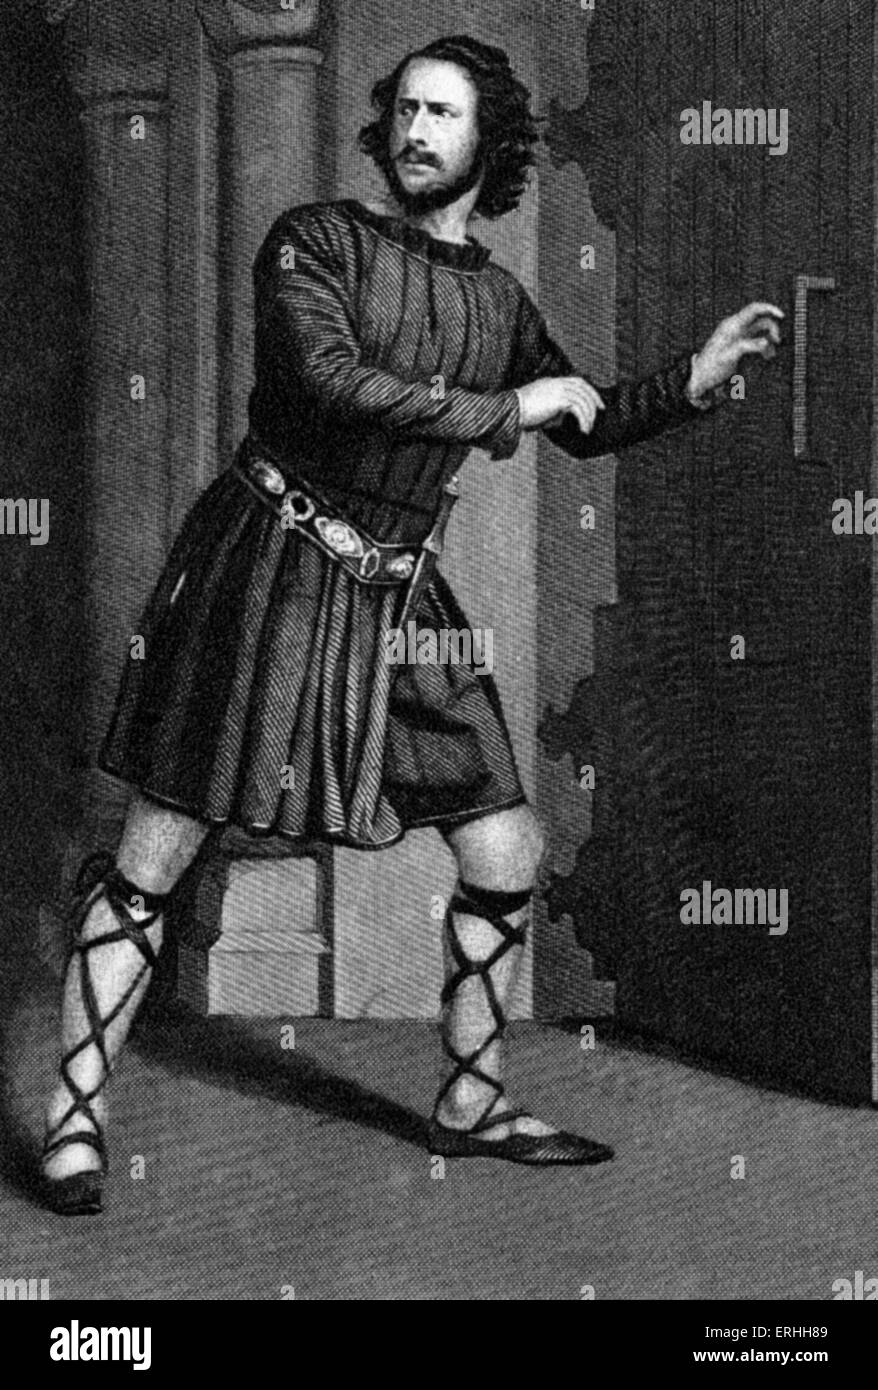 William Shakespeare 's Macbeth - Samuel Phelps come Macbeth. Inglese poeta e drammaturgo, 26 Aprile 1564 - 23 aprile 1616. Foto Stock